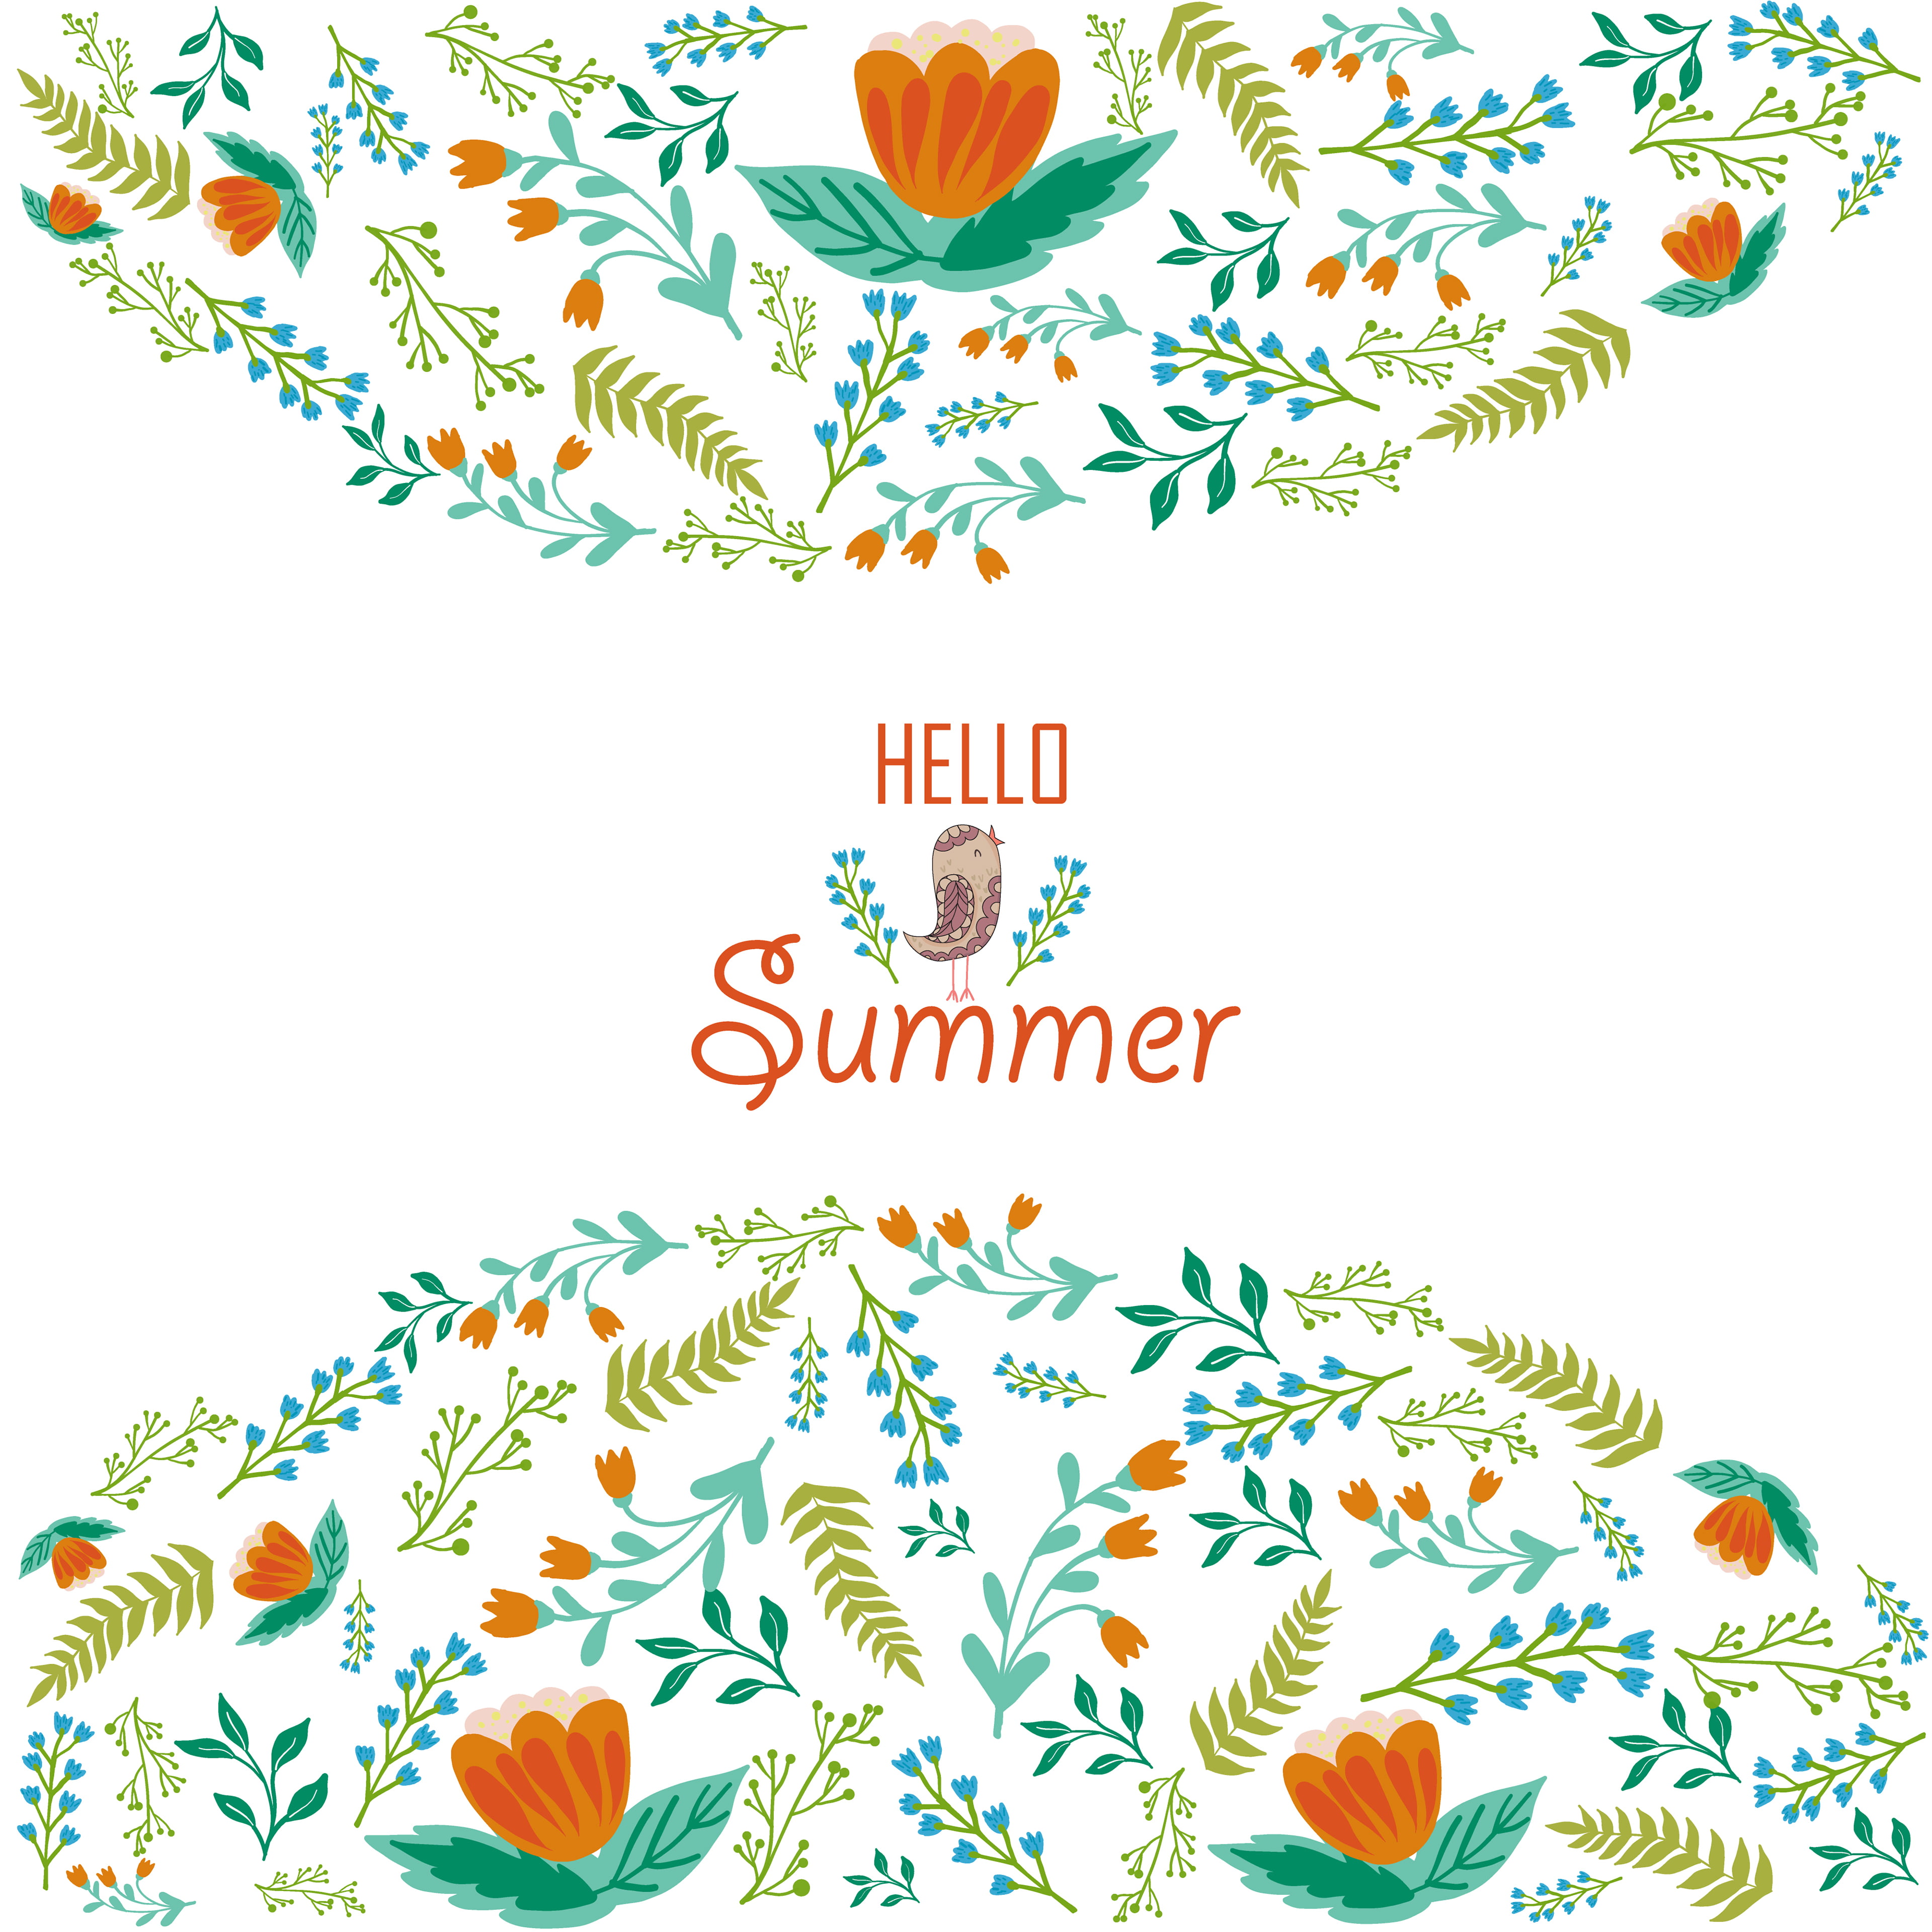 Hello Summer illustration